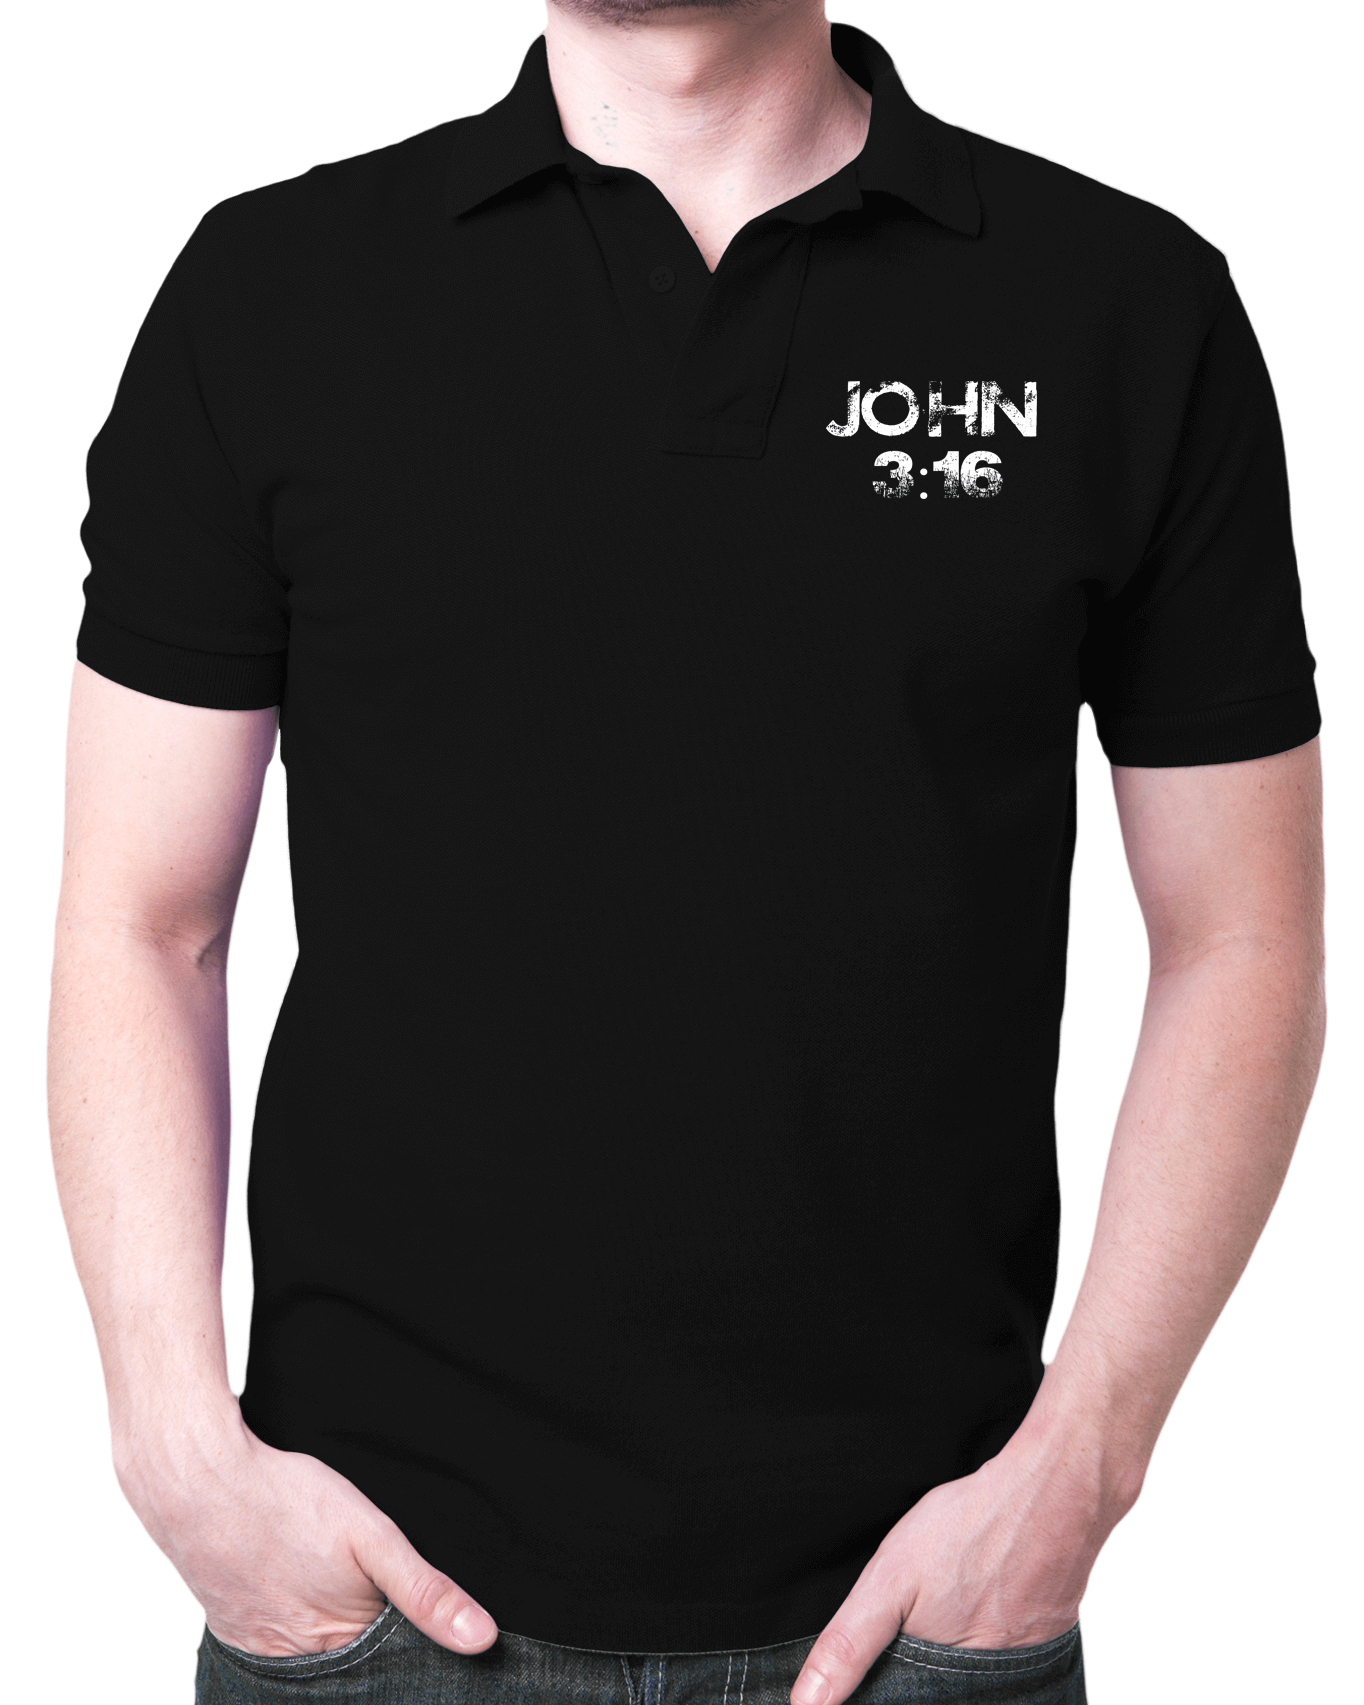 Living Words Men Polo T Shirt S / Black John 3:16 - Polo T Shirt